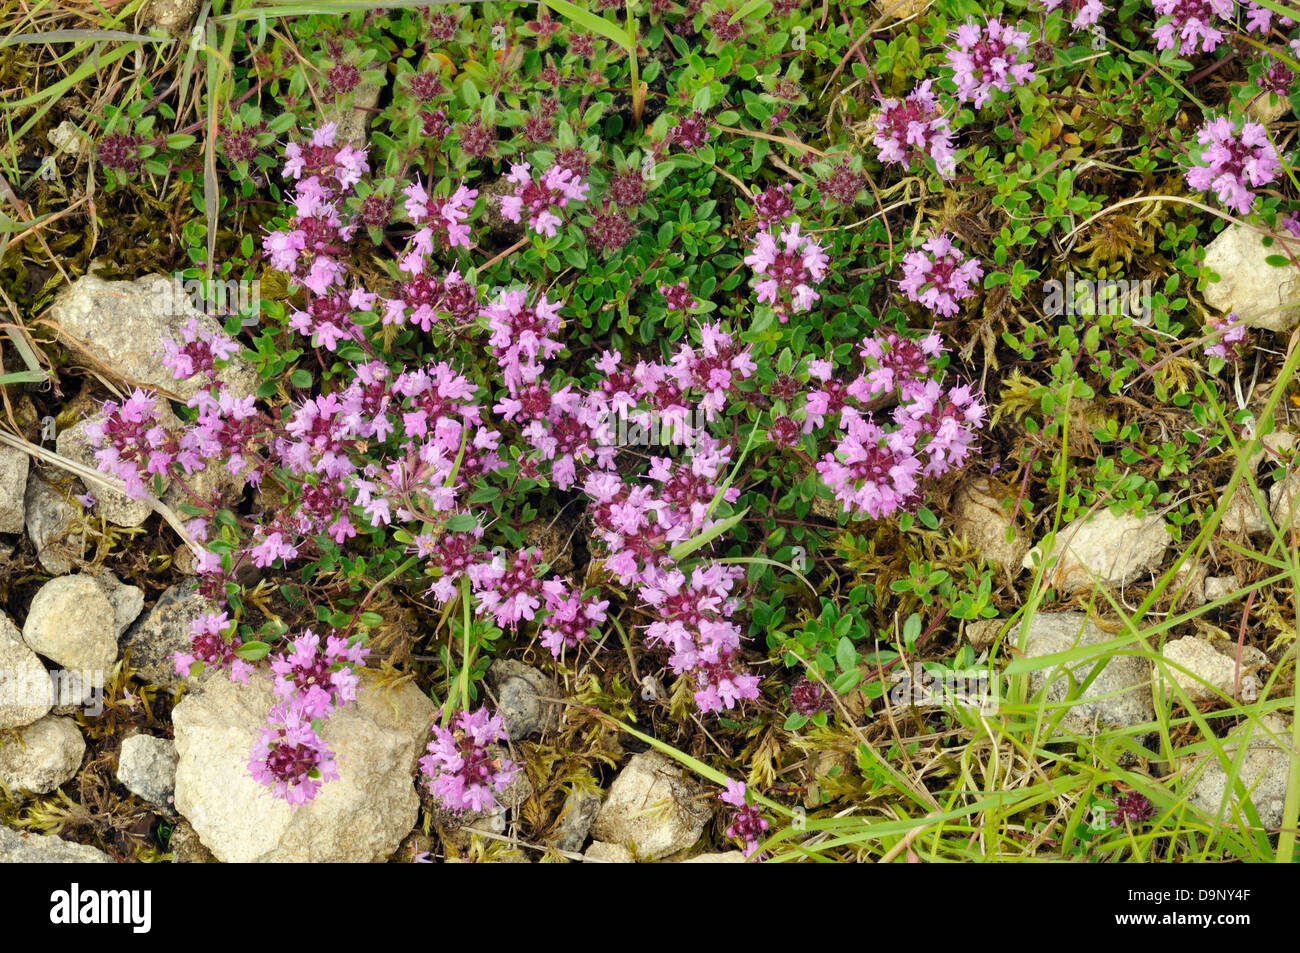 Wild Thyme - Thymus polytrichus In Limestone grassland habitat Stock Photo